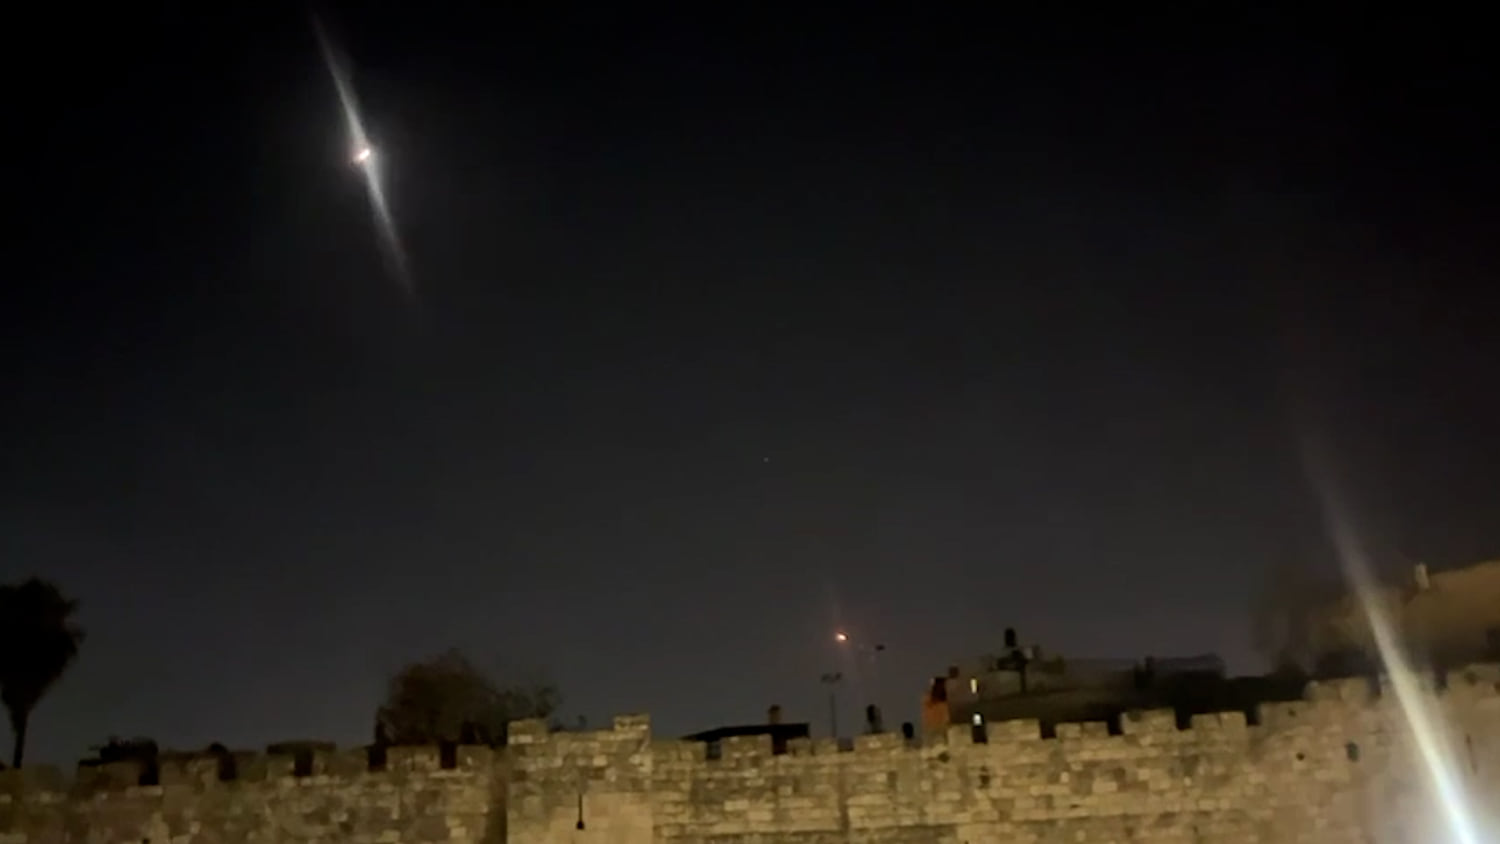 Video shows lights streaking across the sky in Jerusalem